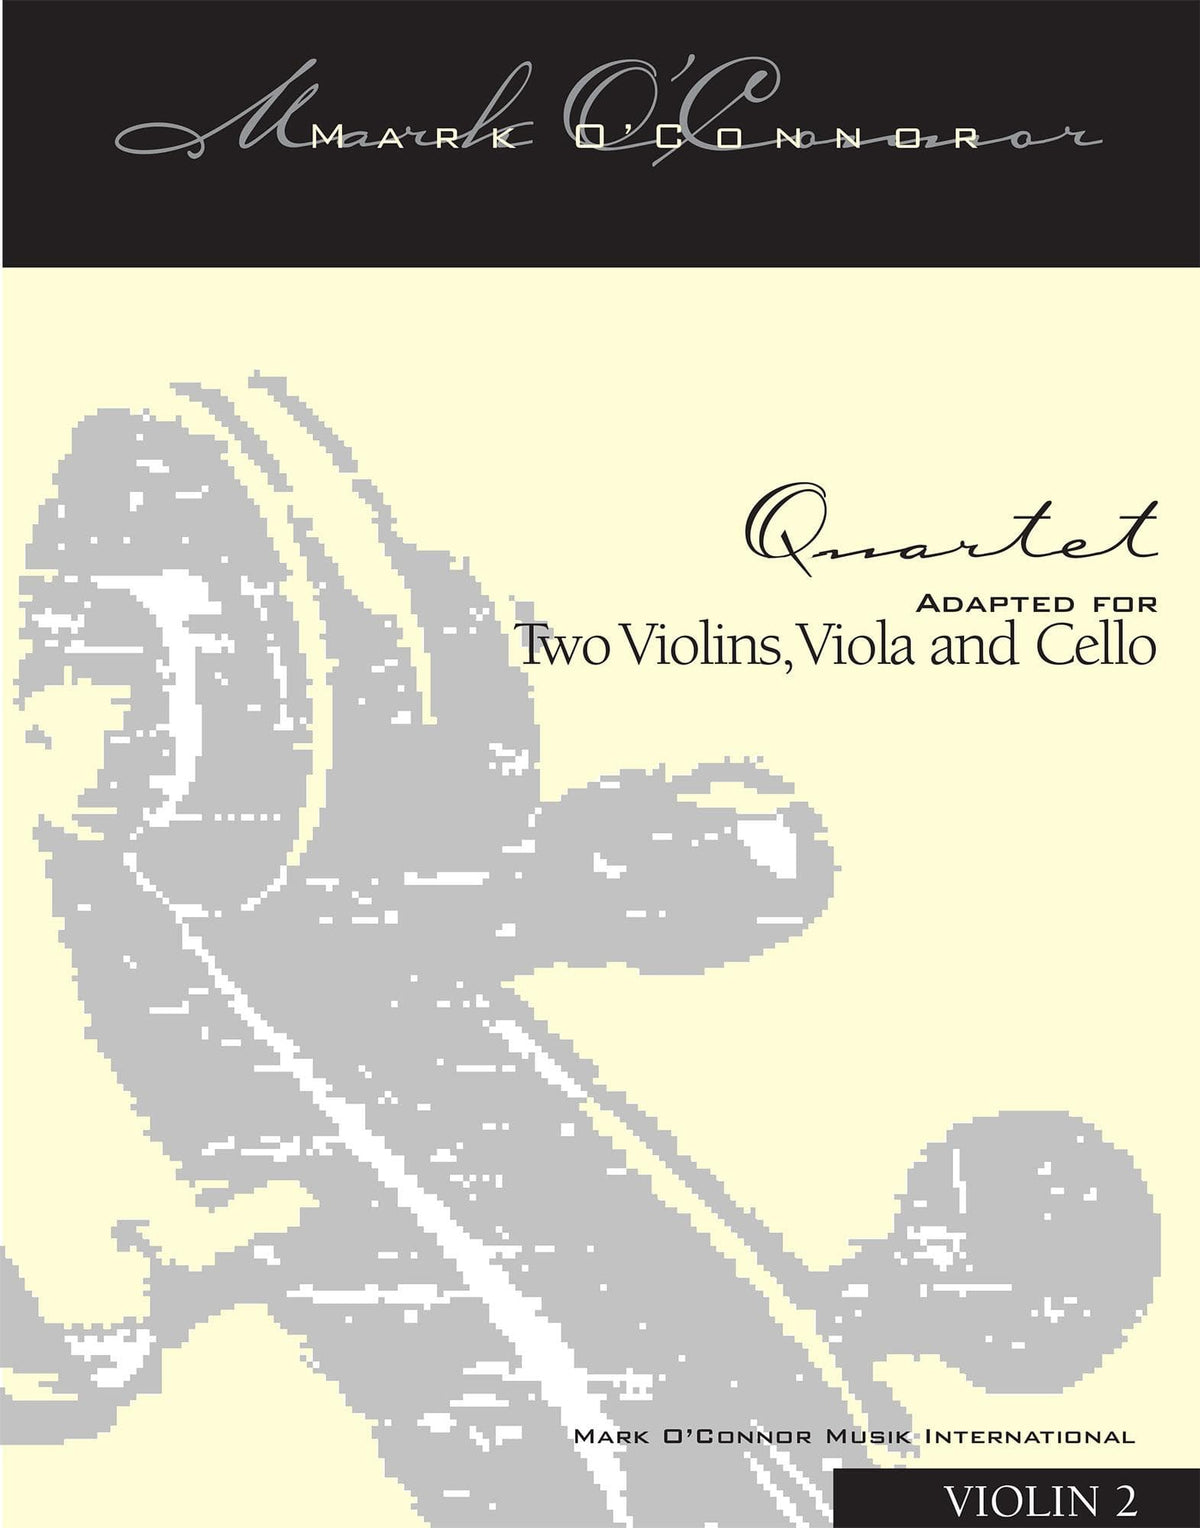 O'Connor, Mark - Quartet for 2 Violins, Viola, and Cello - Violin 2 - Digital Download